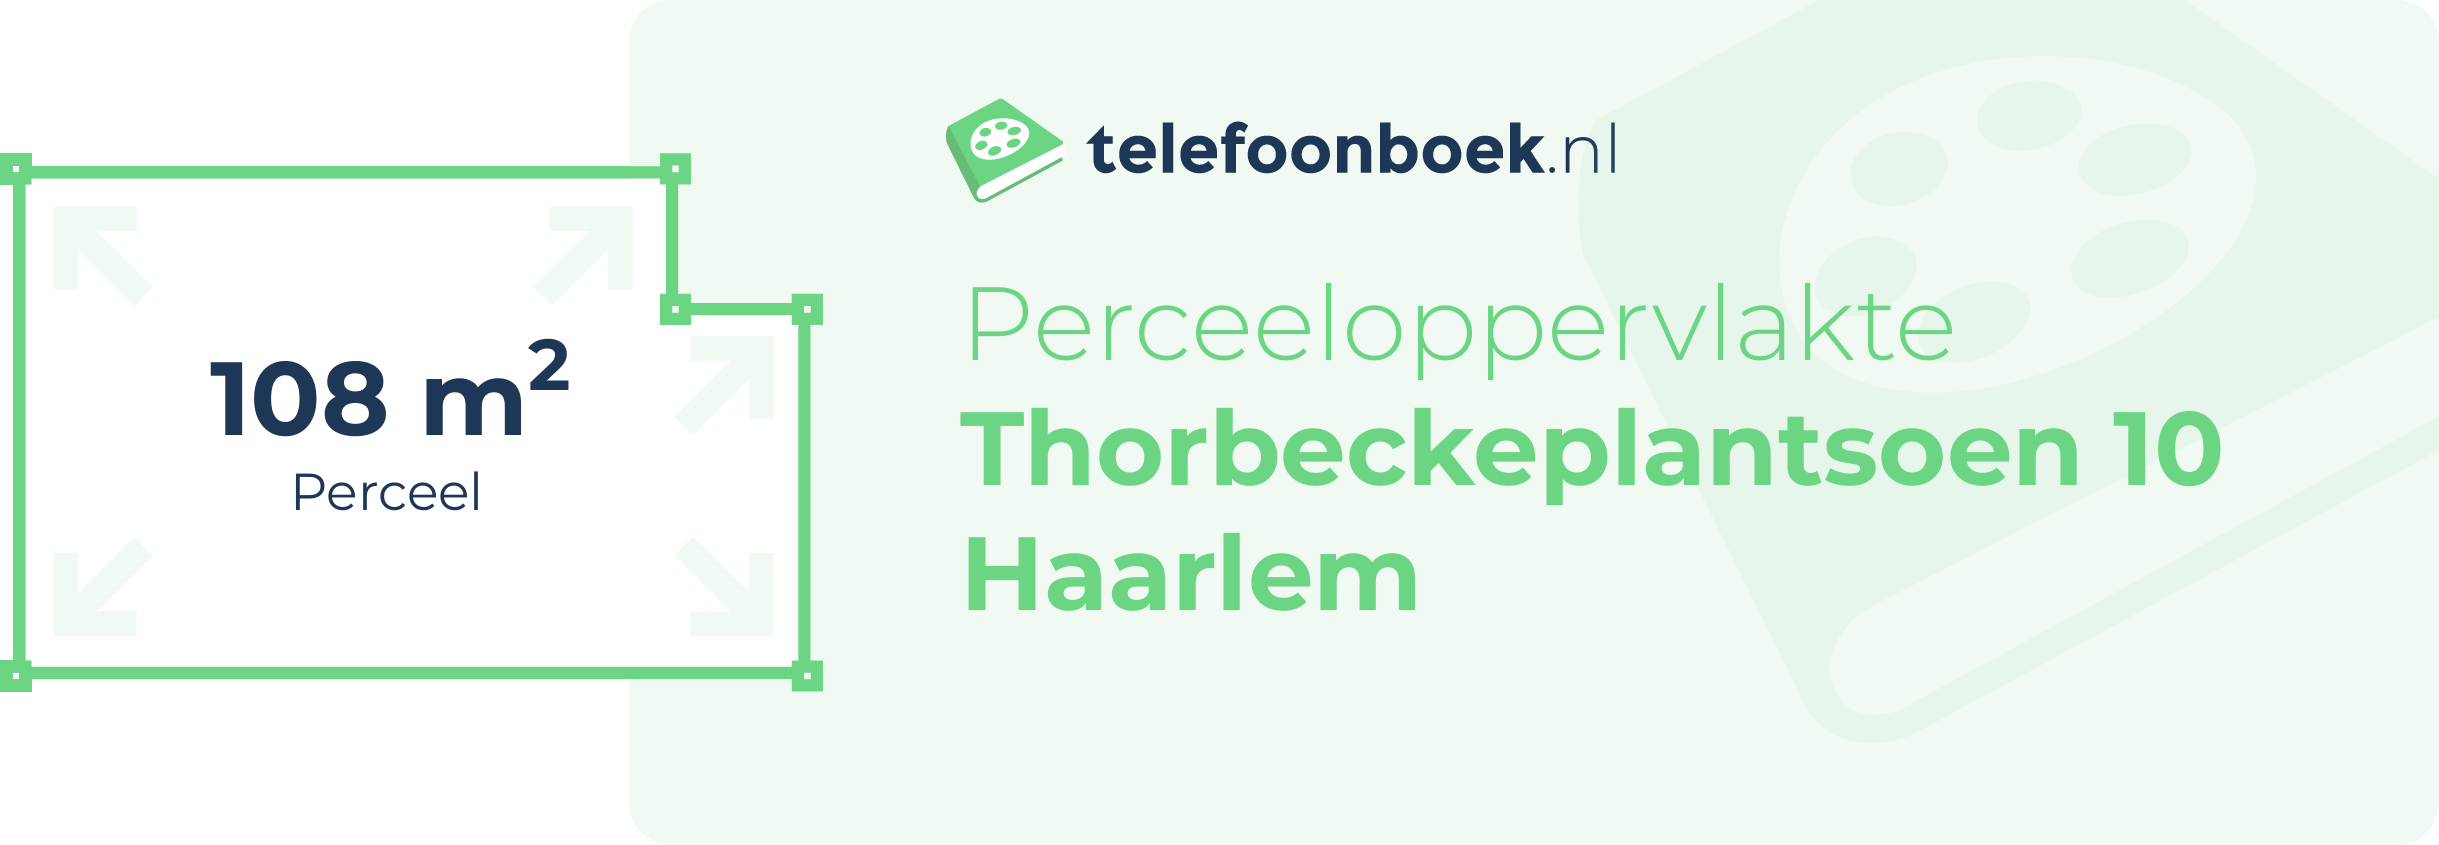 Perceeloppervlakte Thorbeckeplantsoen 10 Haarlem